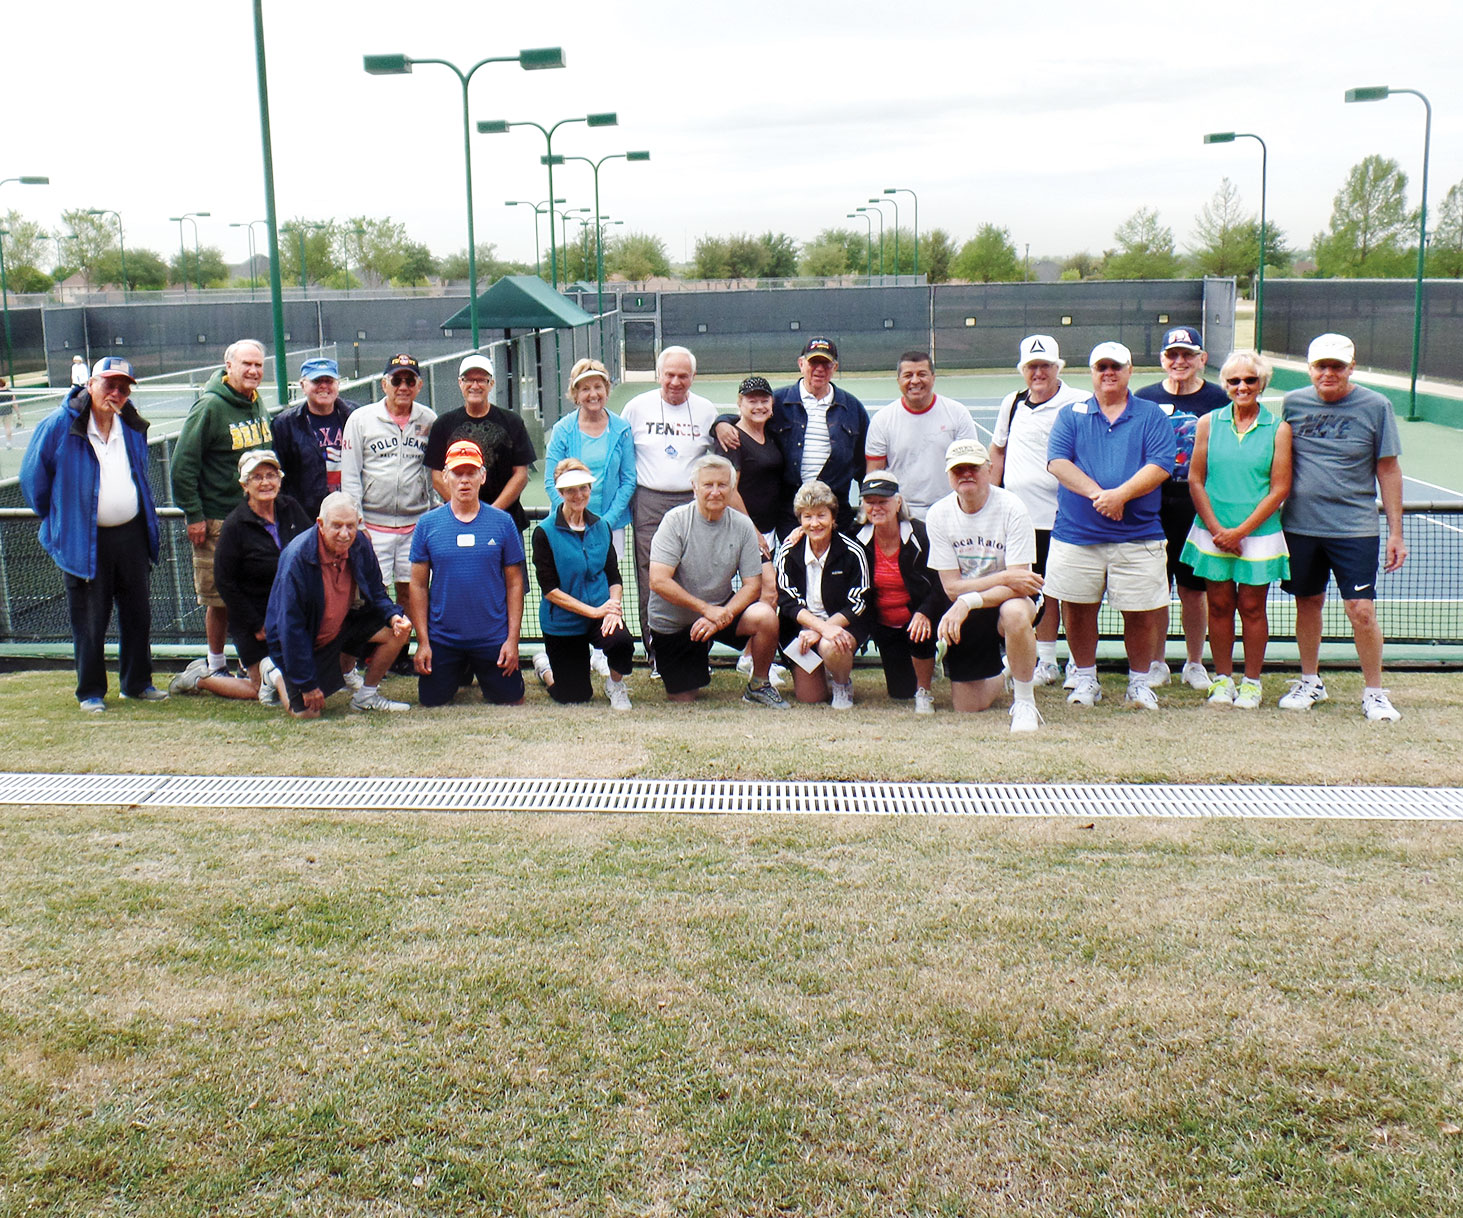 Tennis Club Spring Fling participants